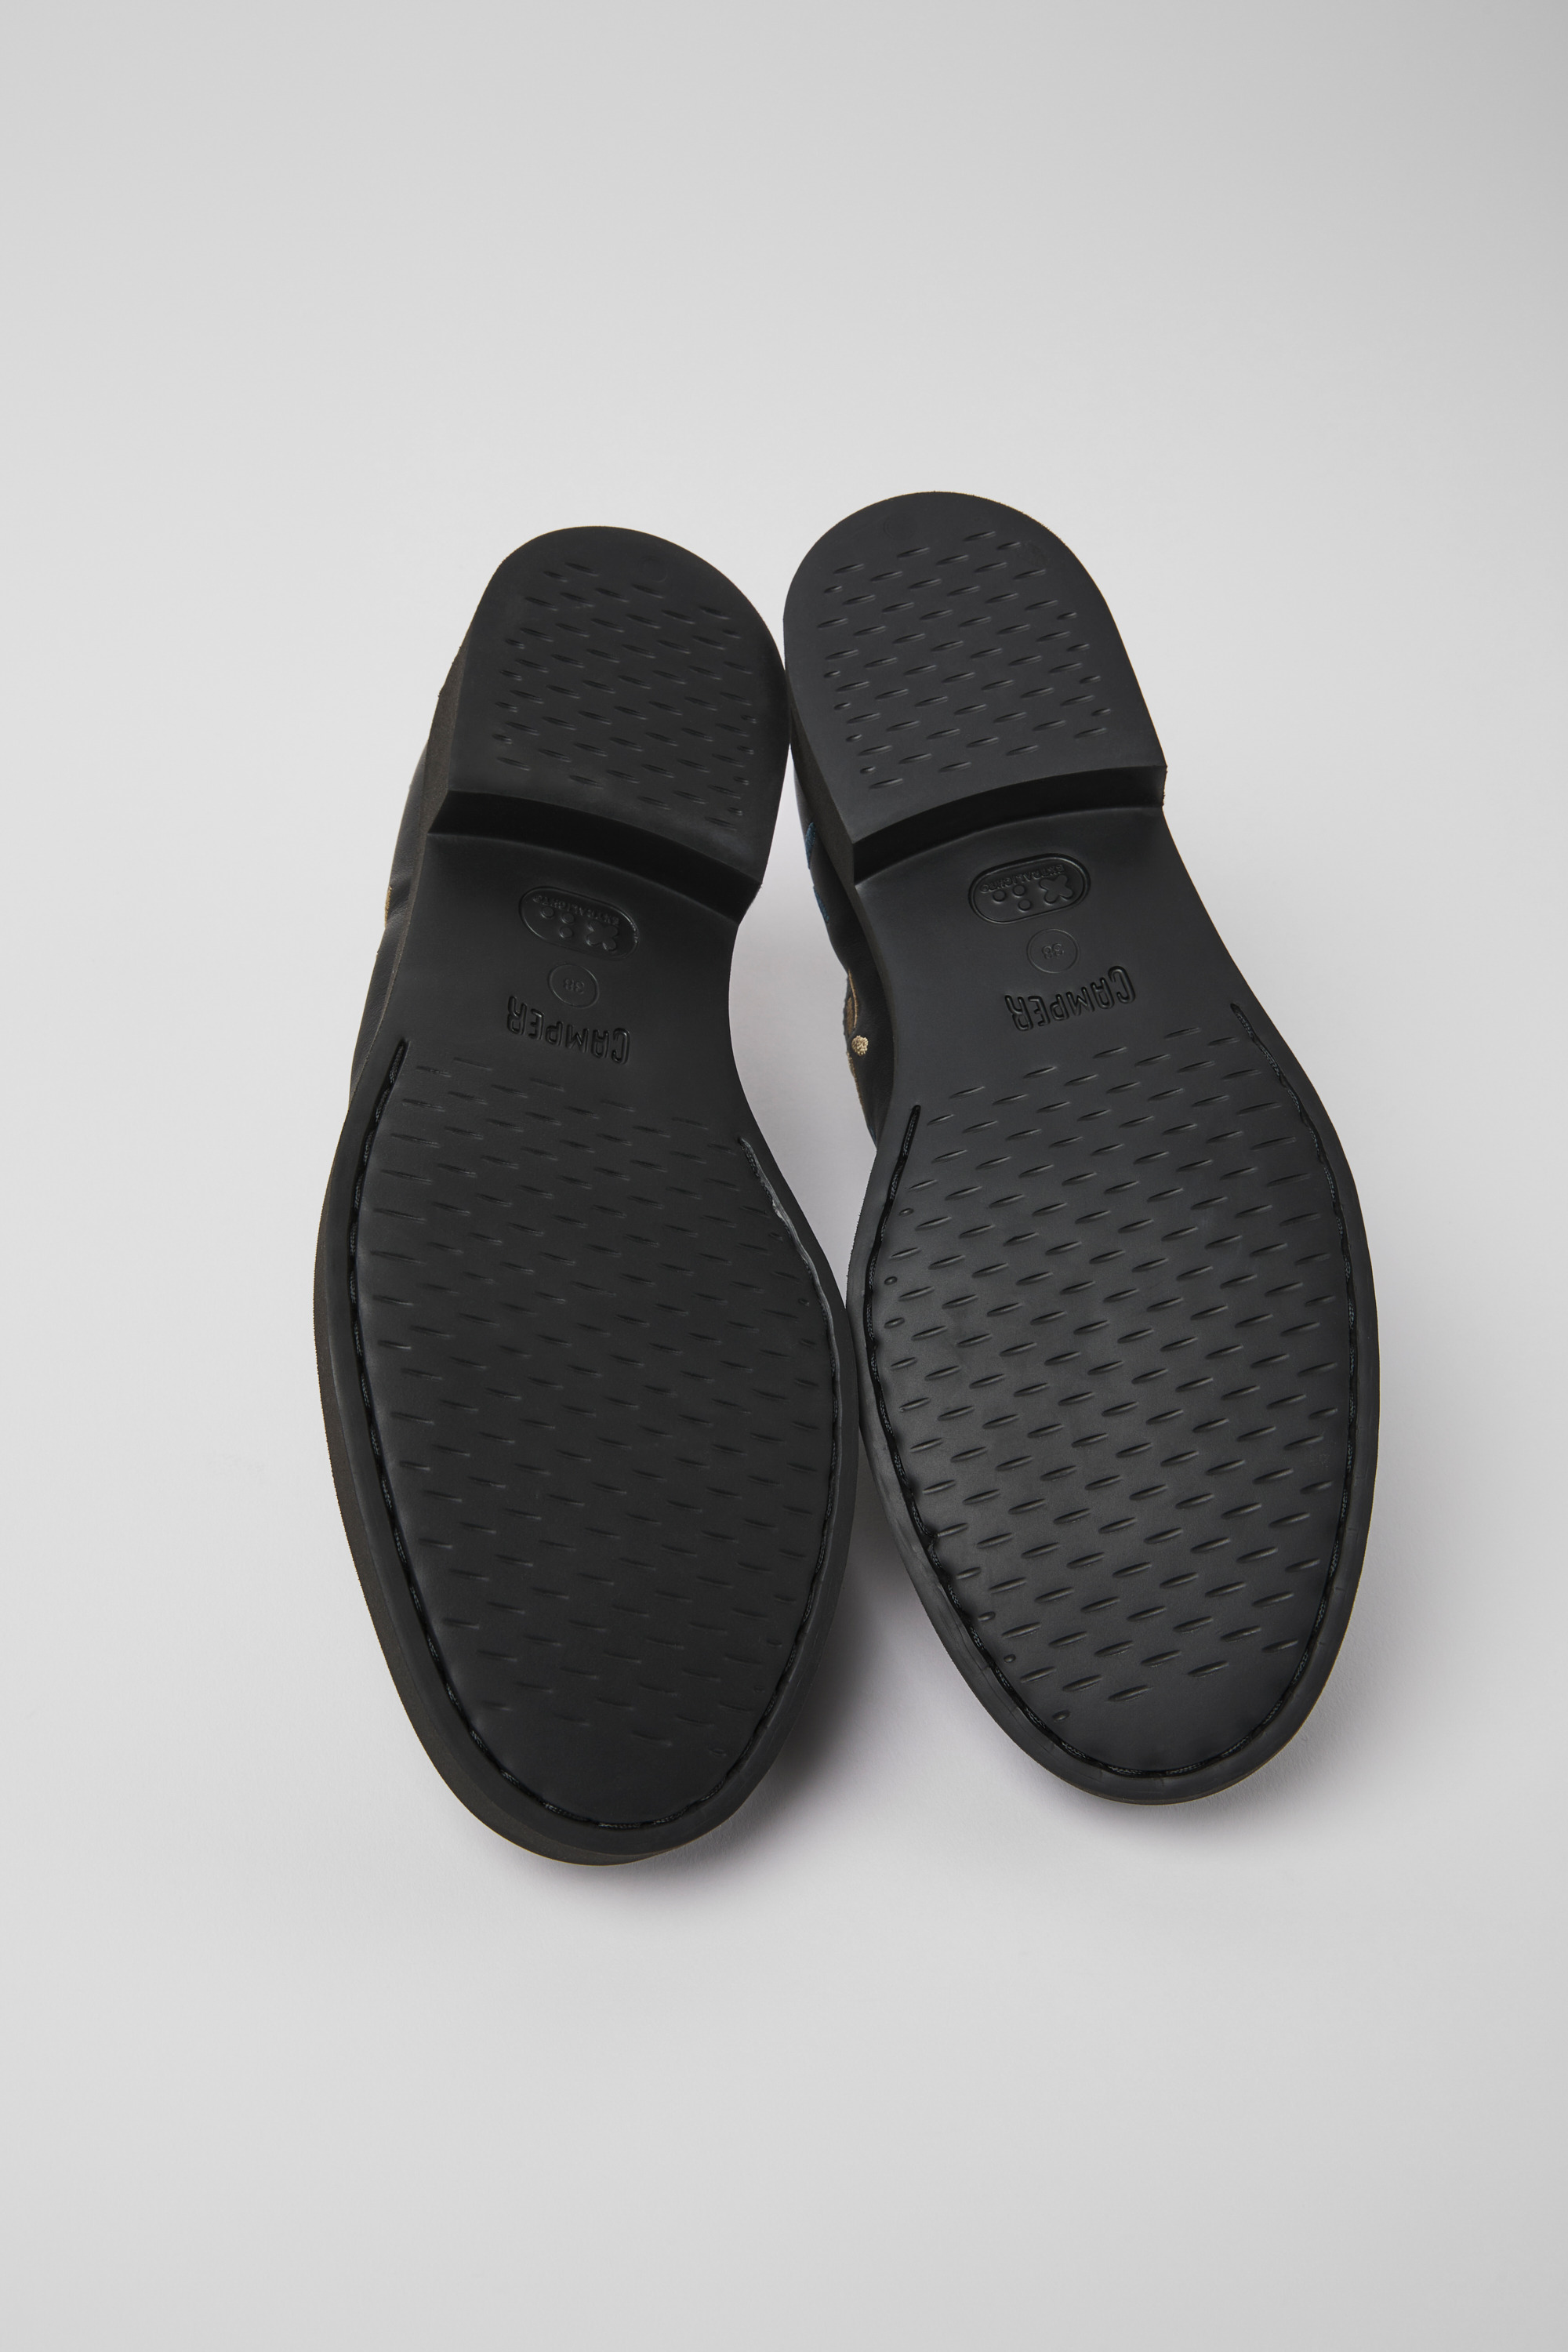 Twins Black Formal Shoes for Women - Camper USA - Camper Shoes